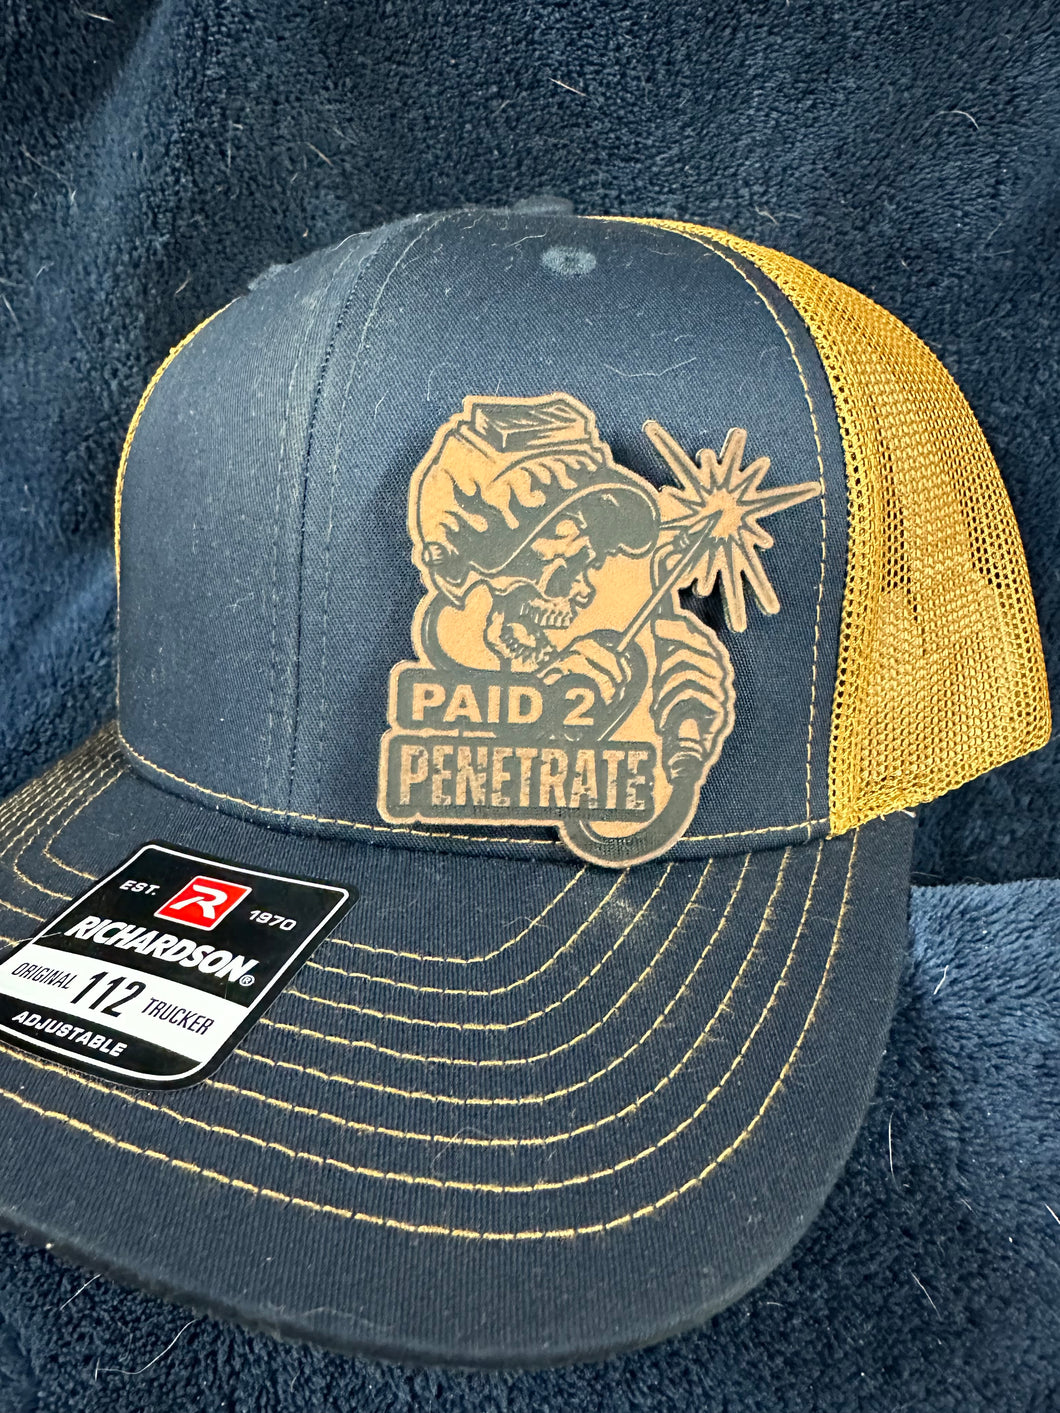 Paid 2 Penetrate 3 options Richardson hat